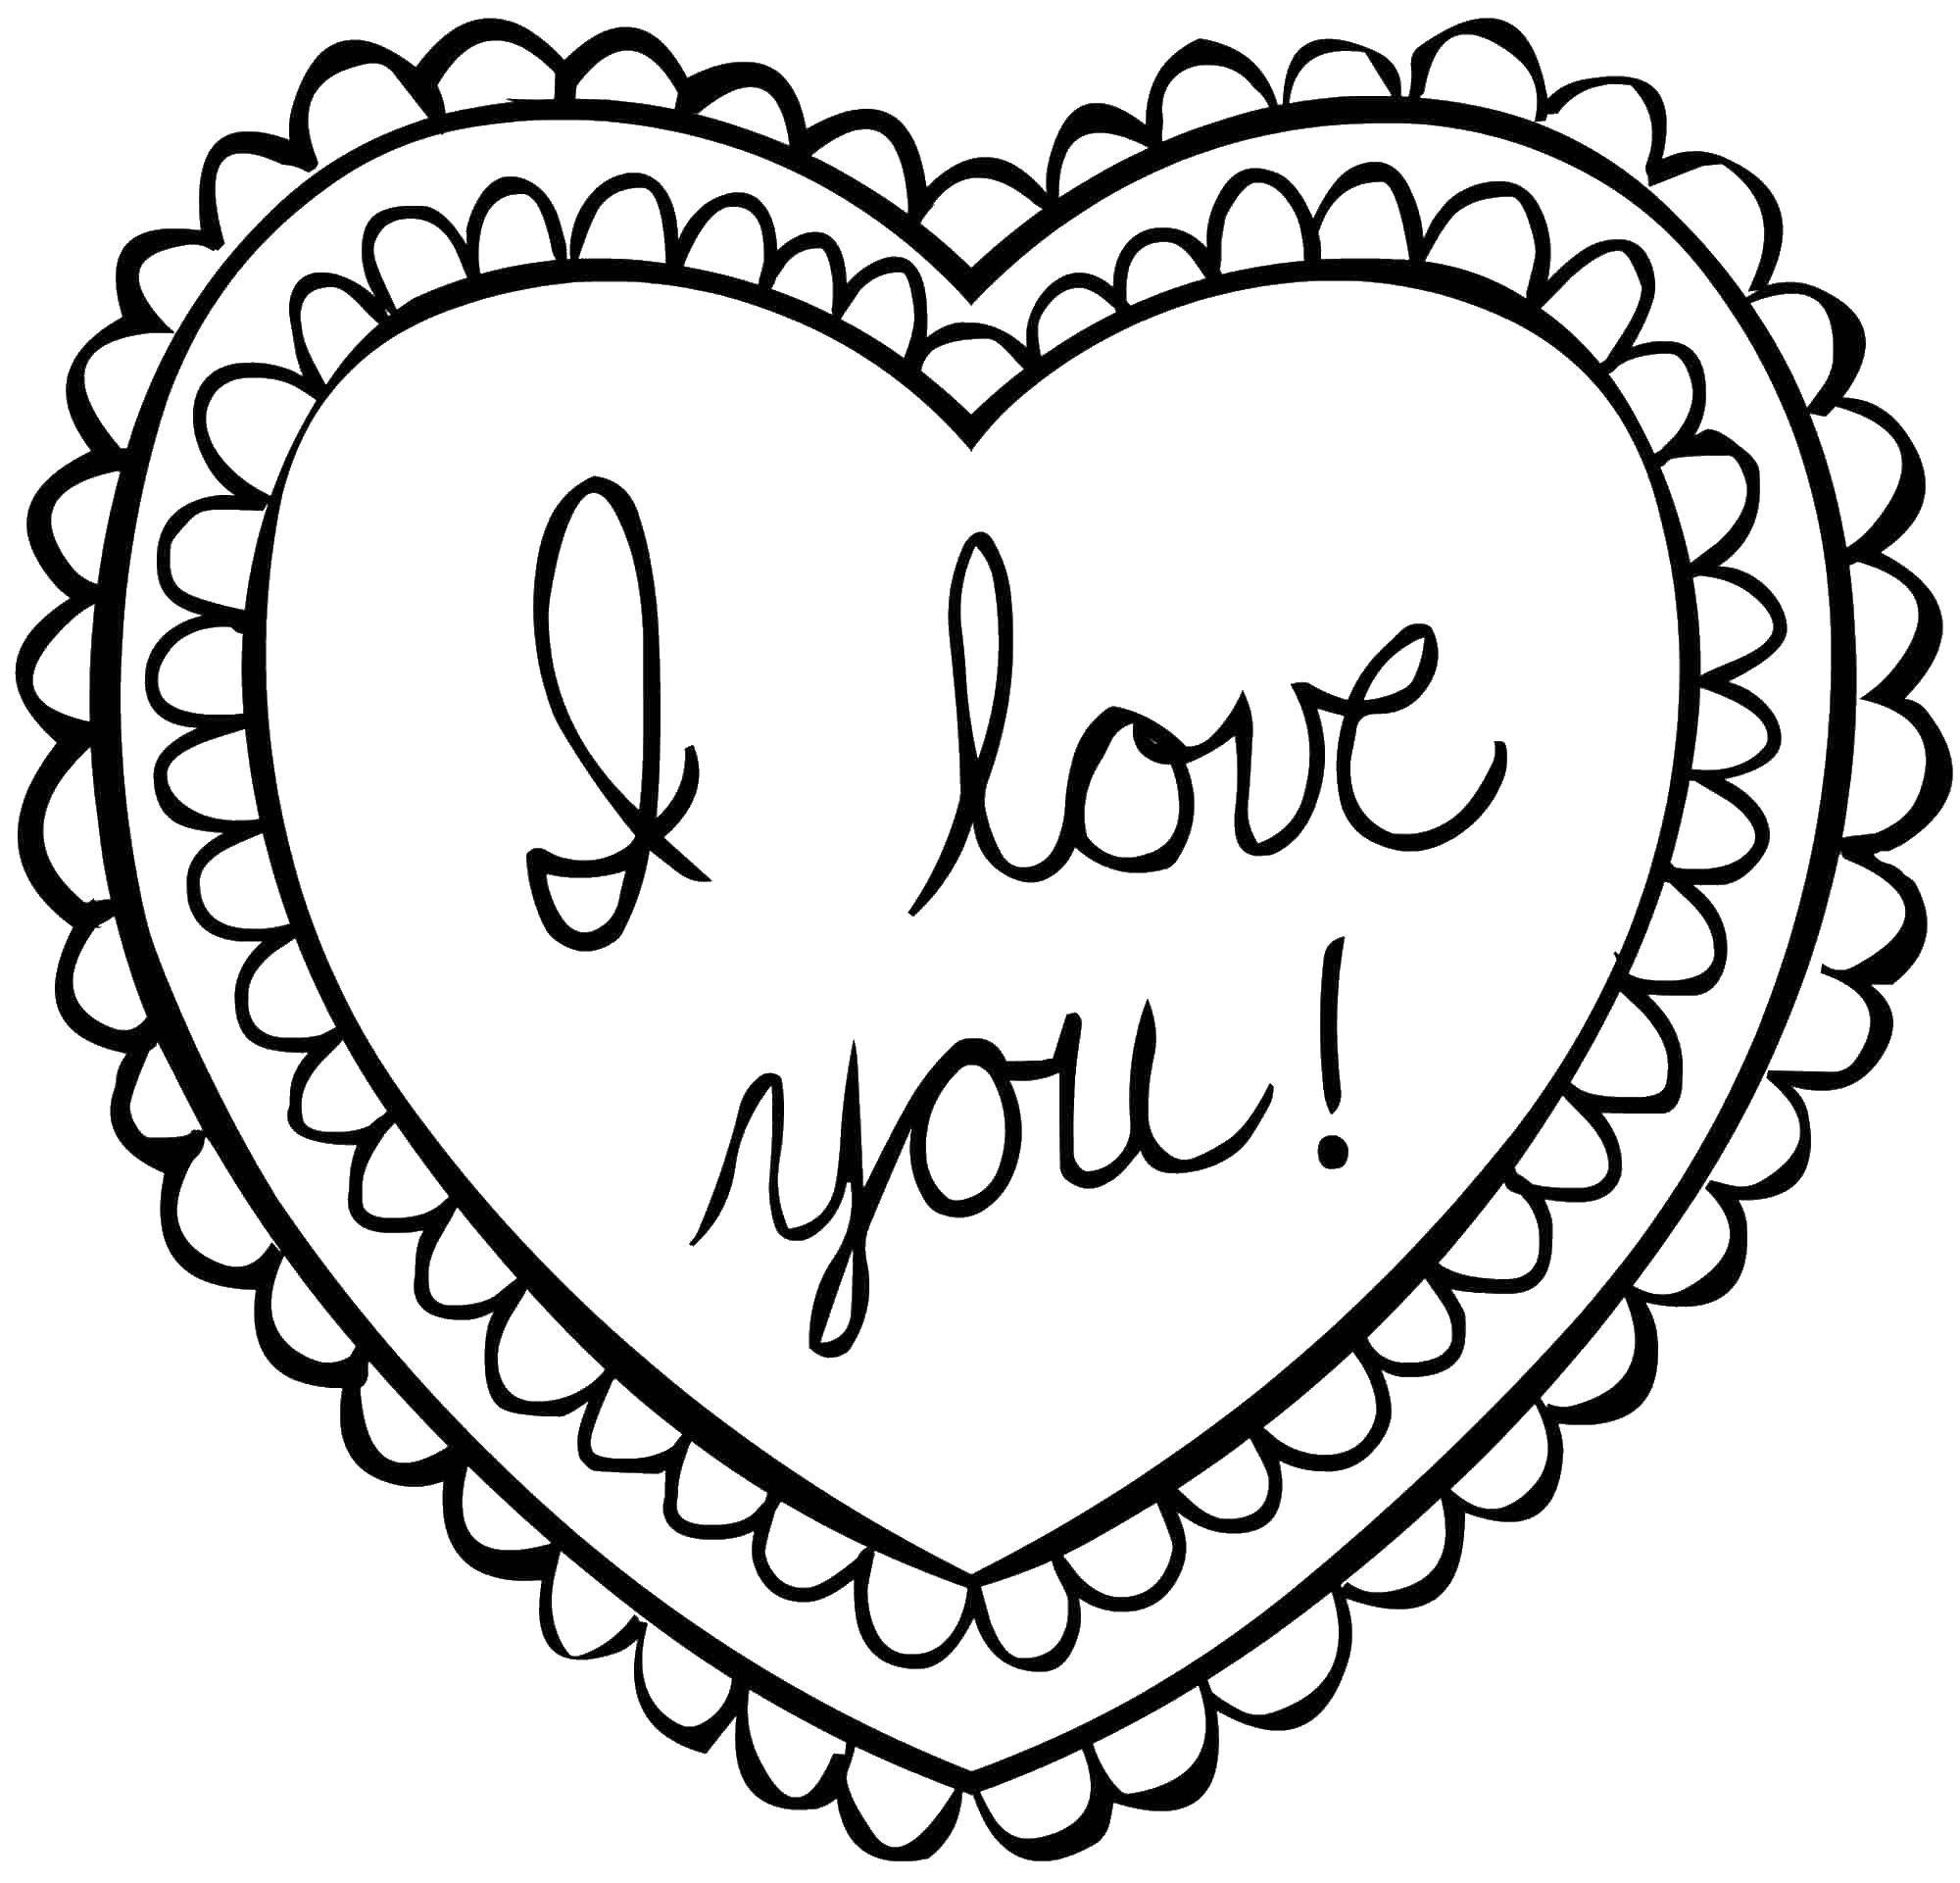 Название: Раскраска Сердце и надпись я тебя люблю . Категория: Я тебя люблю. Теги: сердце, любовь, я тебя люблю.